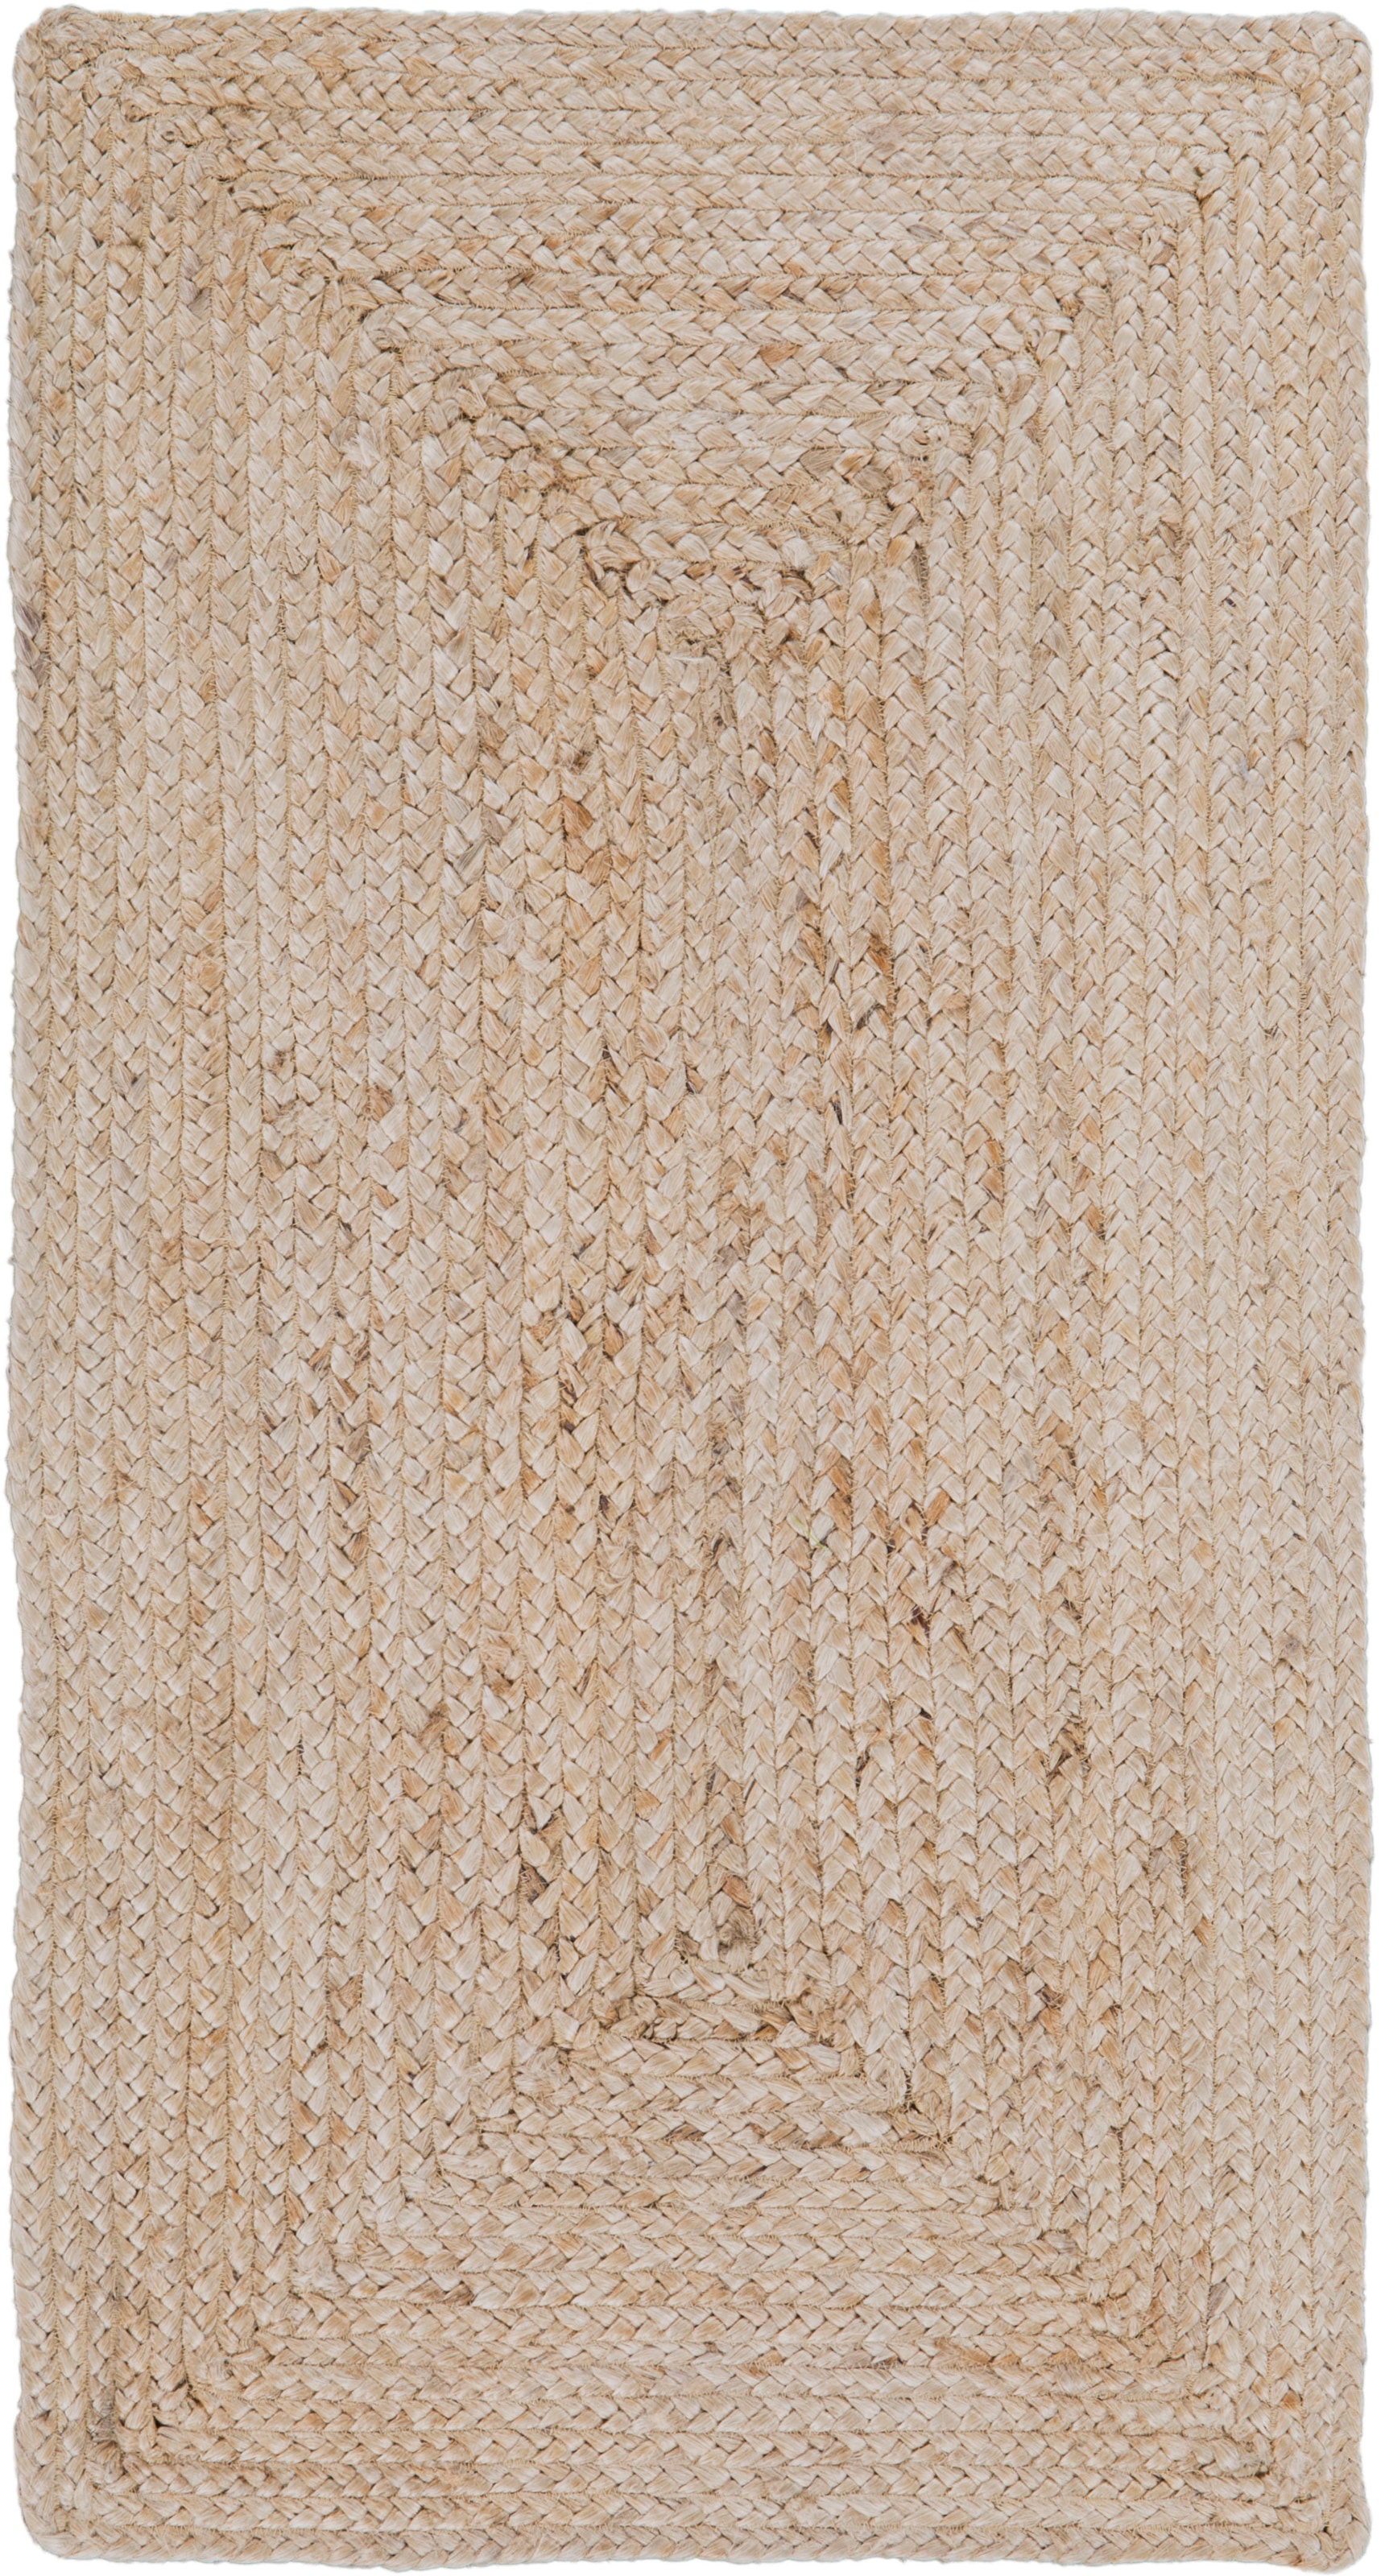 LUXOR living Teppich »Salo«, rechteckig, handgeflochten, Flecht Design, 100% Naturfaser, mit Bordüre